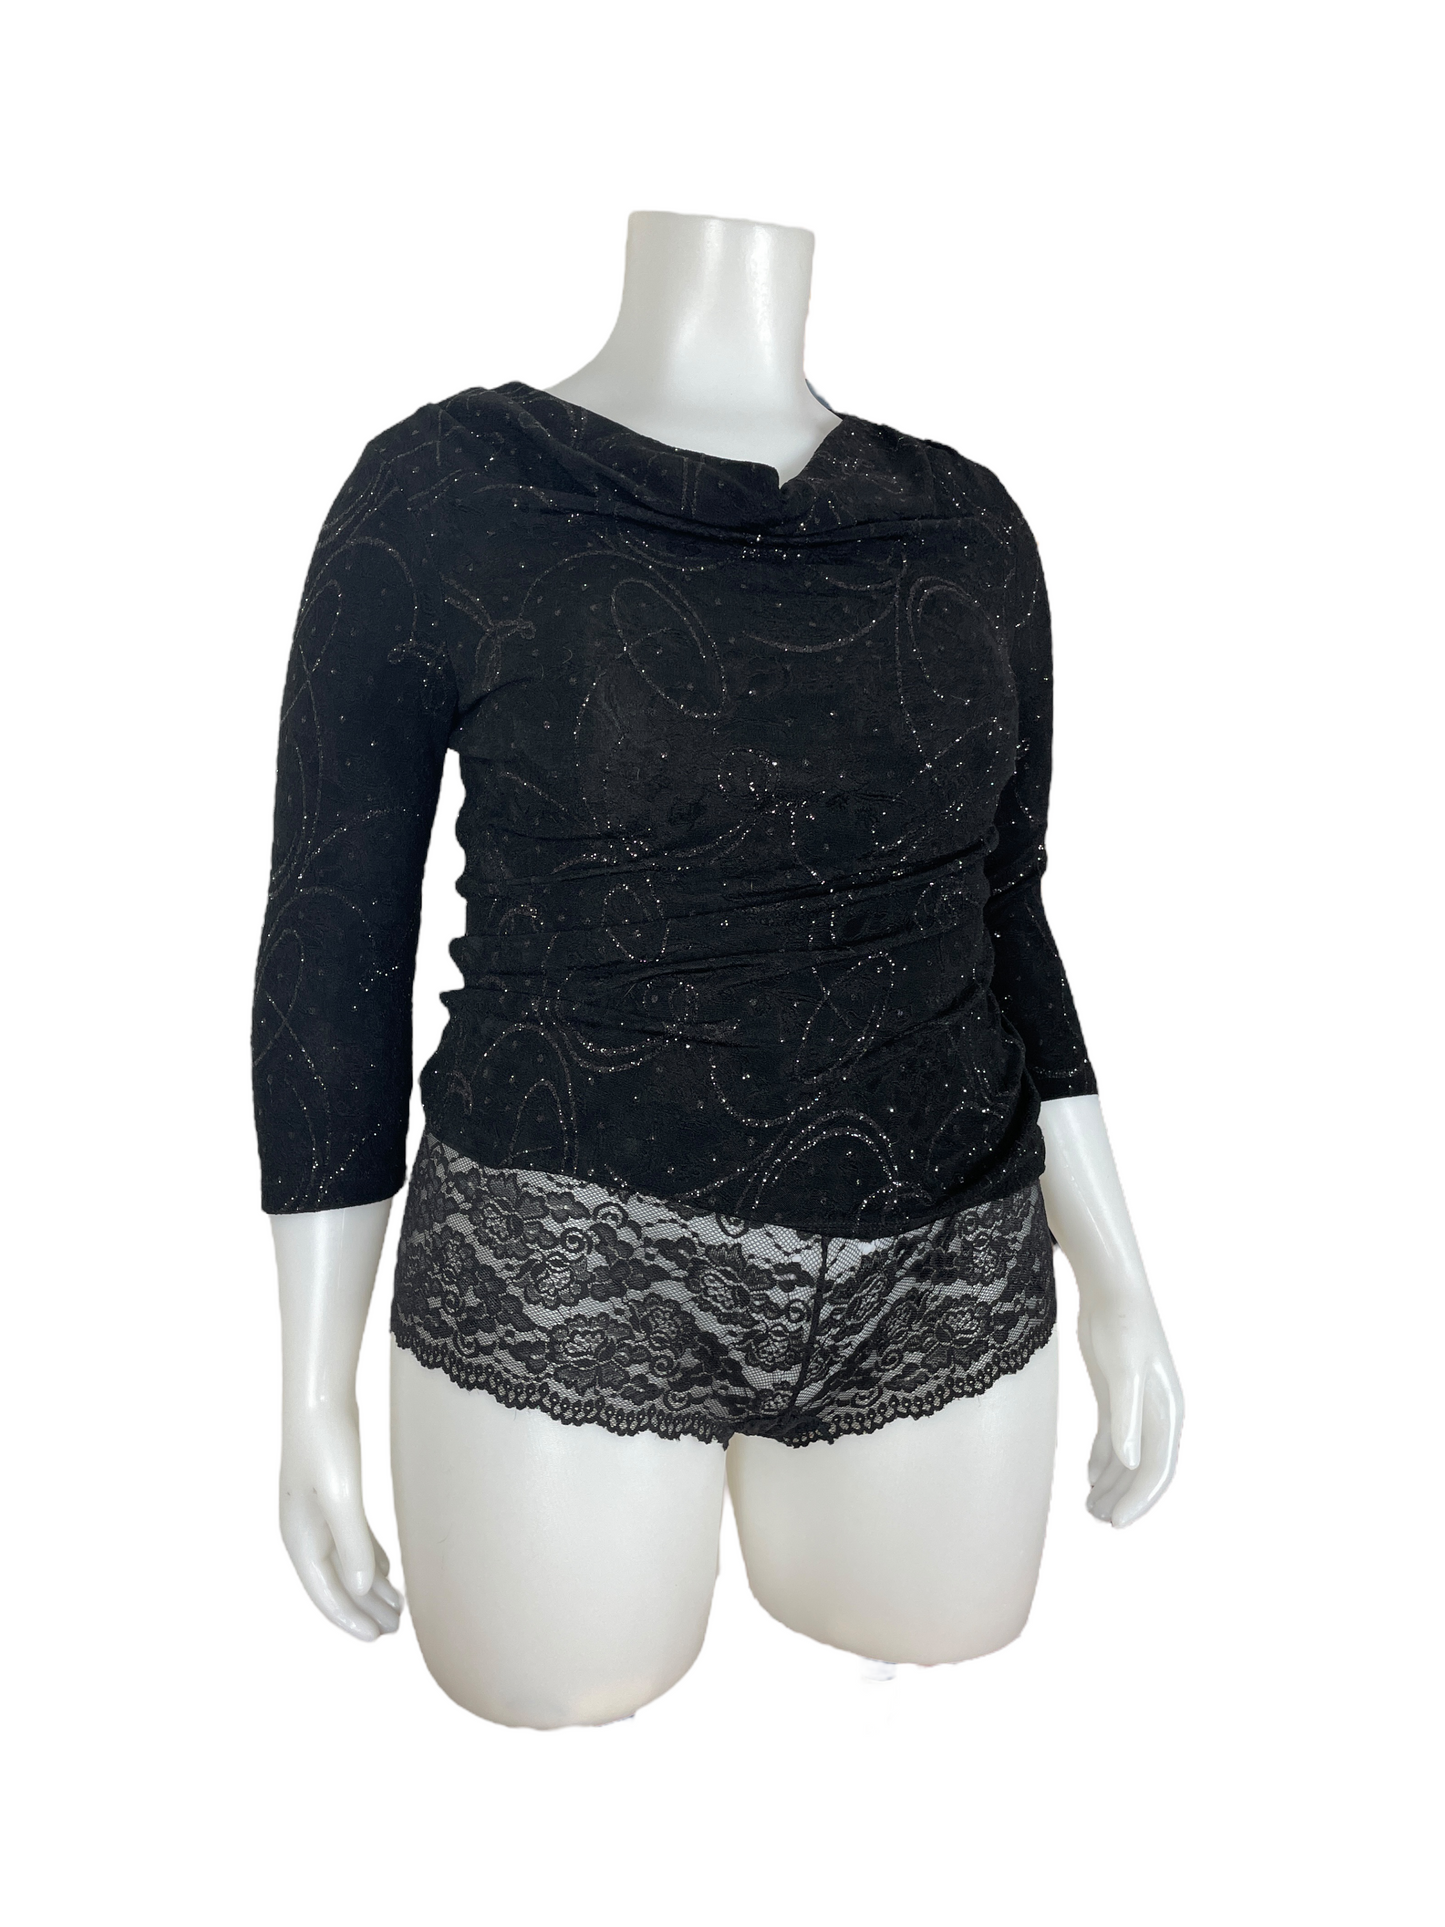 "Laura" Black Sparkly 3/4 Sleeve Shirt (XL)